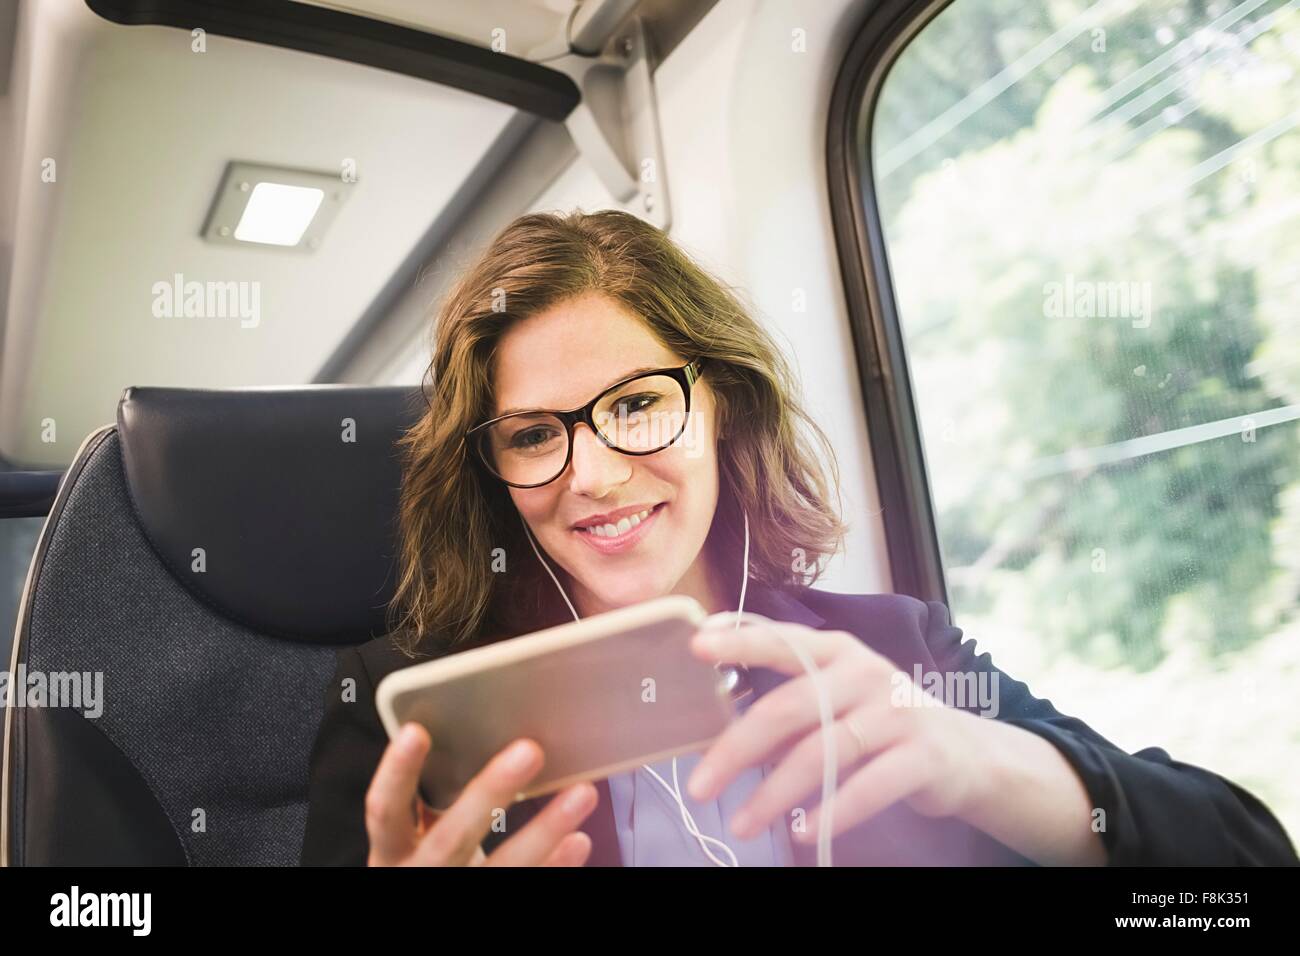 Mid adult woman on train, using smartphone, wearing earphones Stock Photo